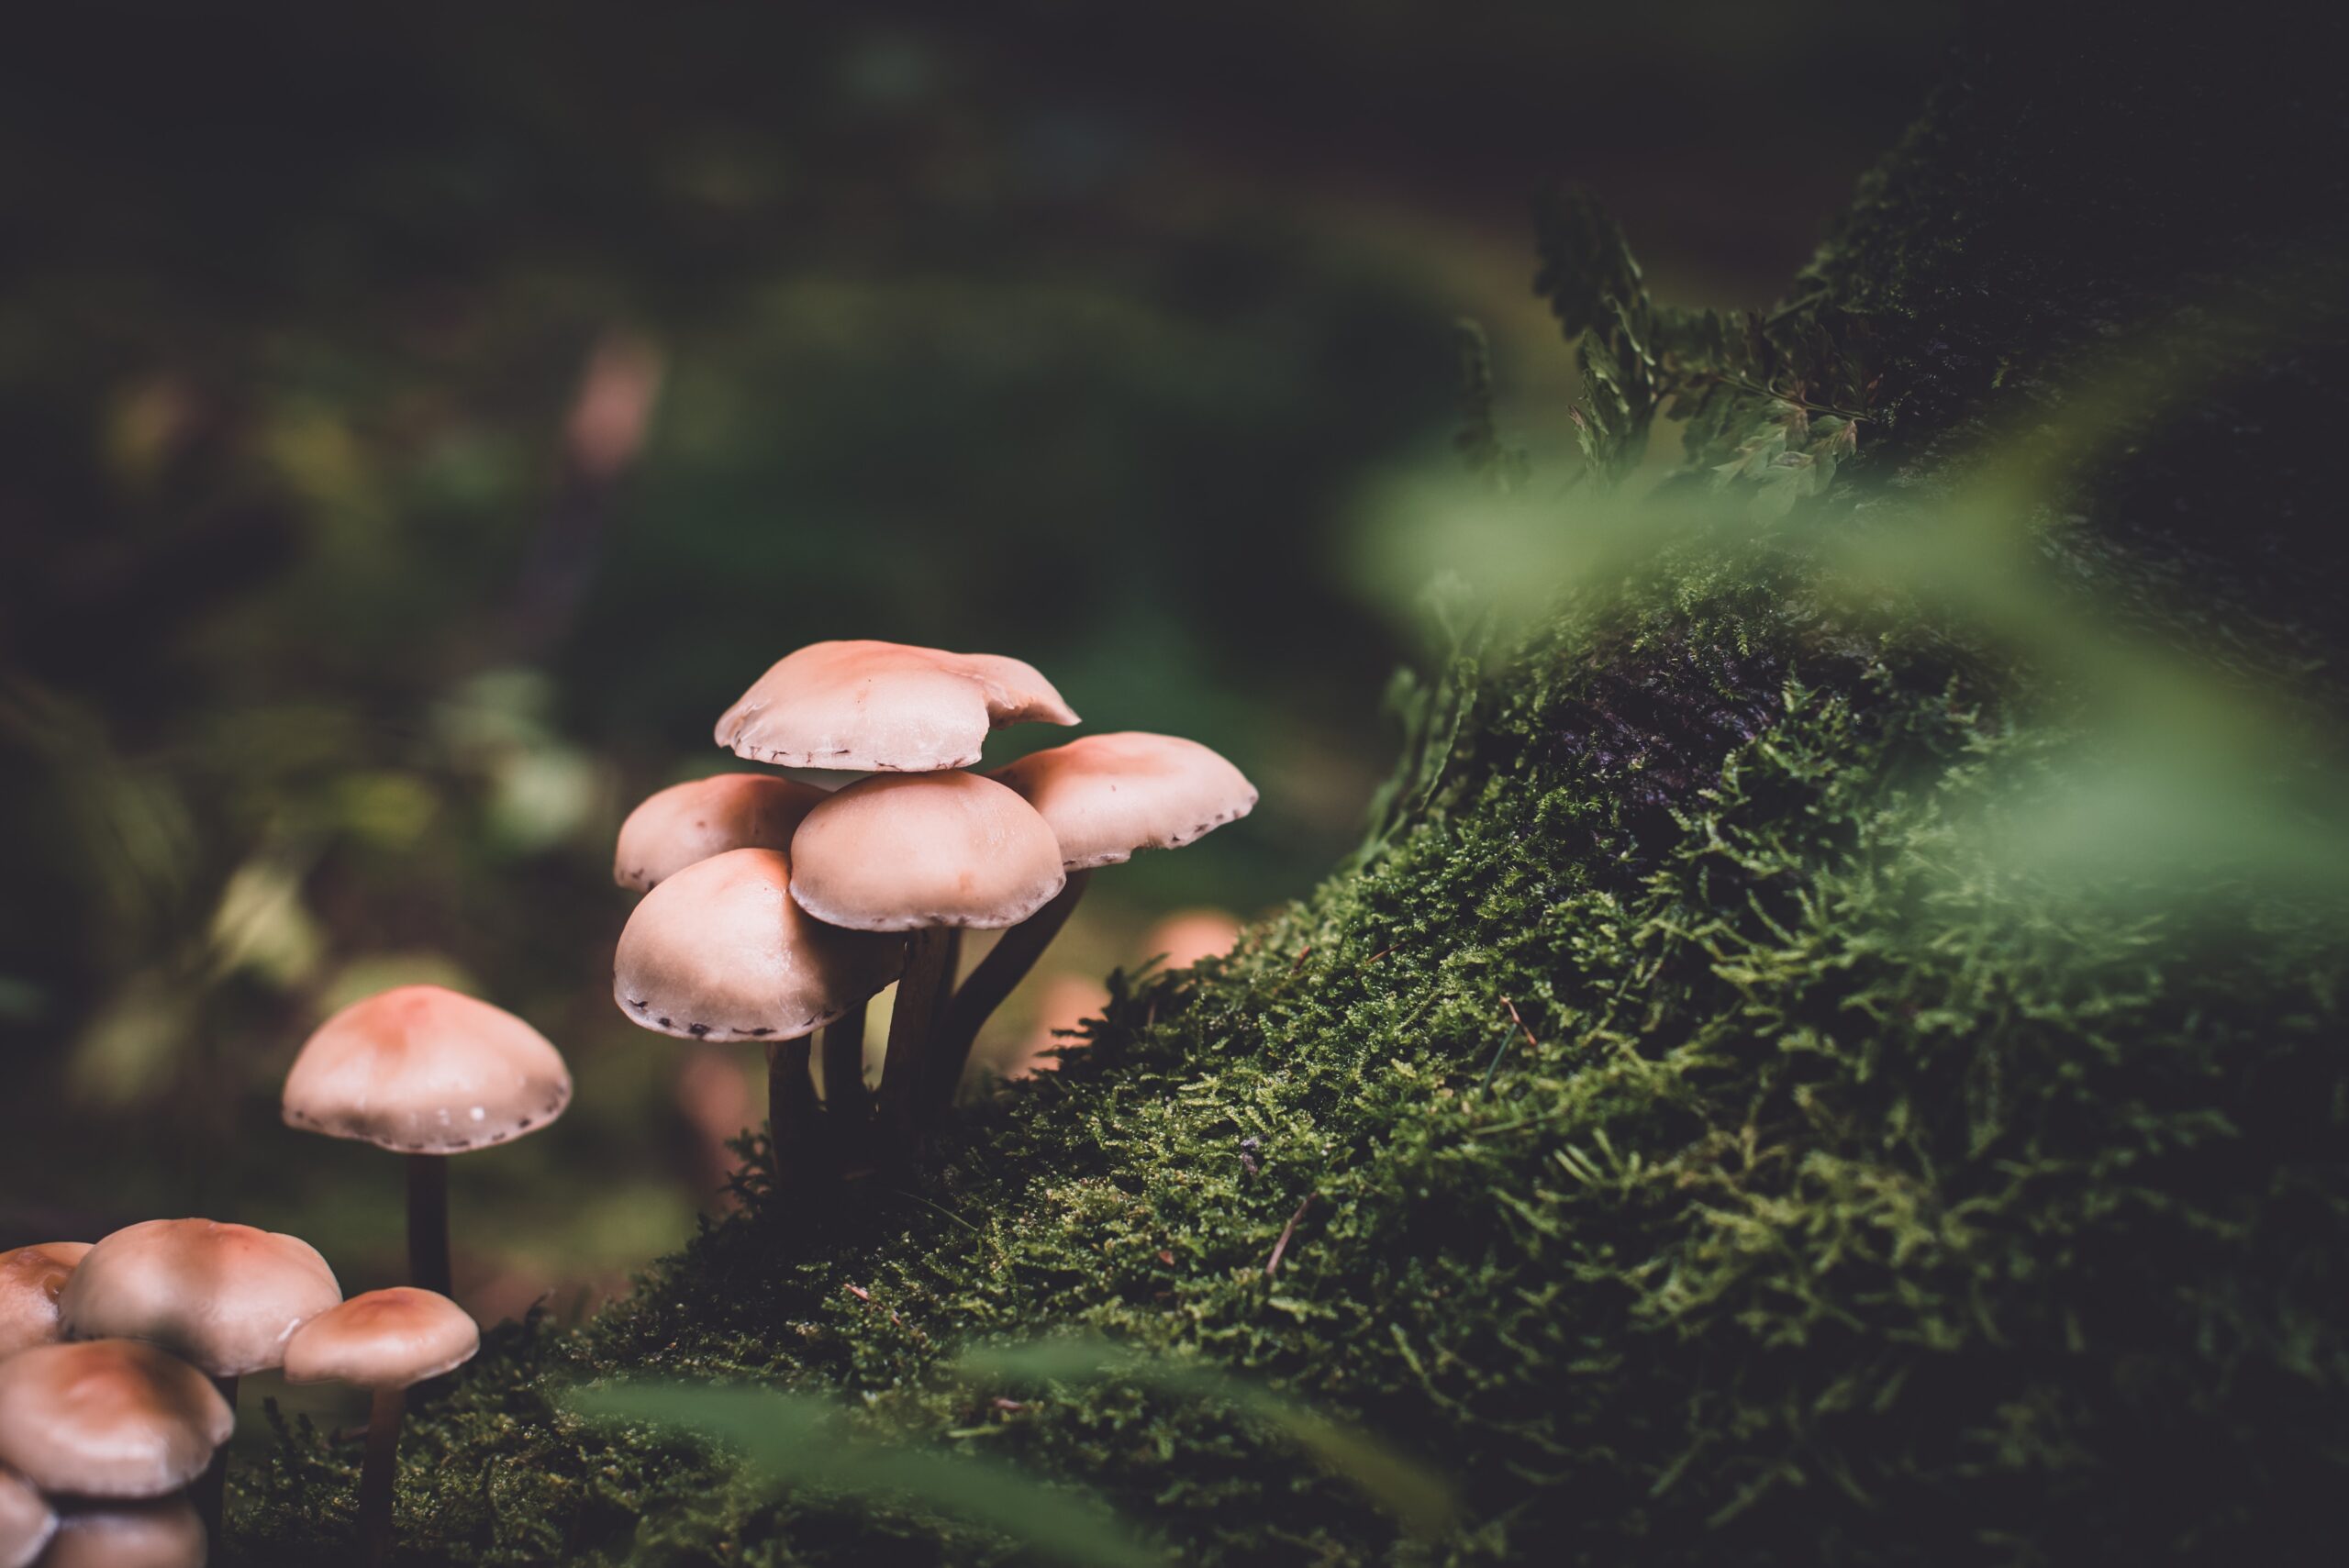 How do mushrooms grow without light